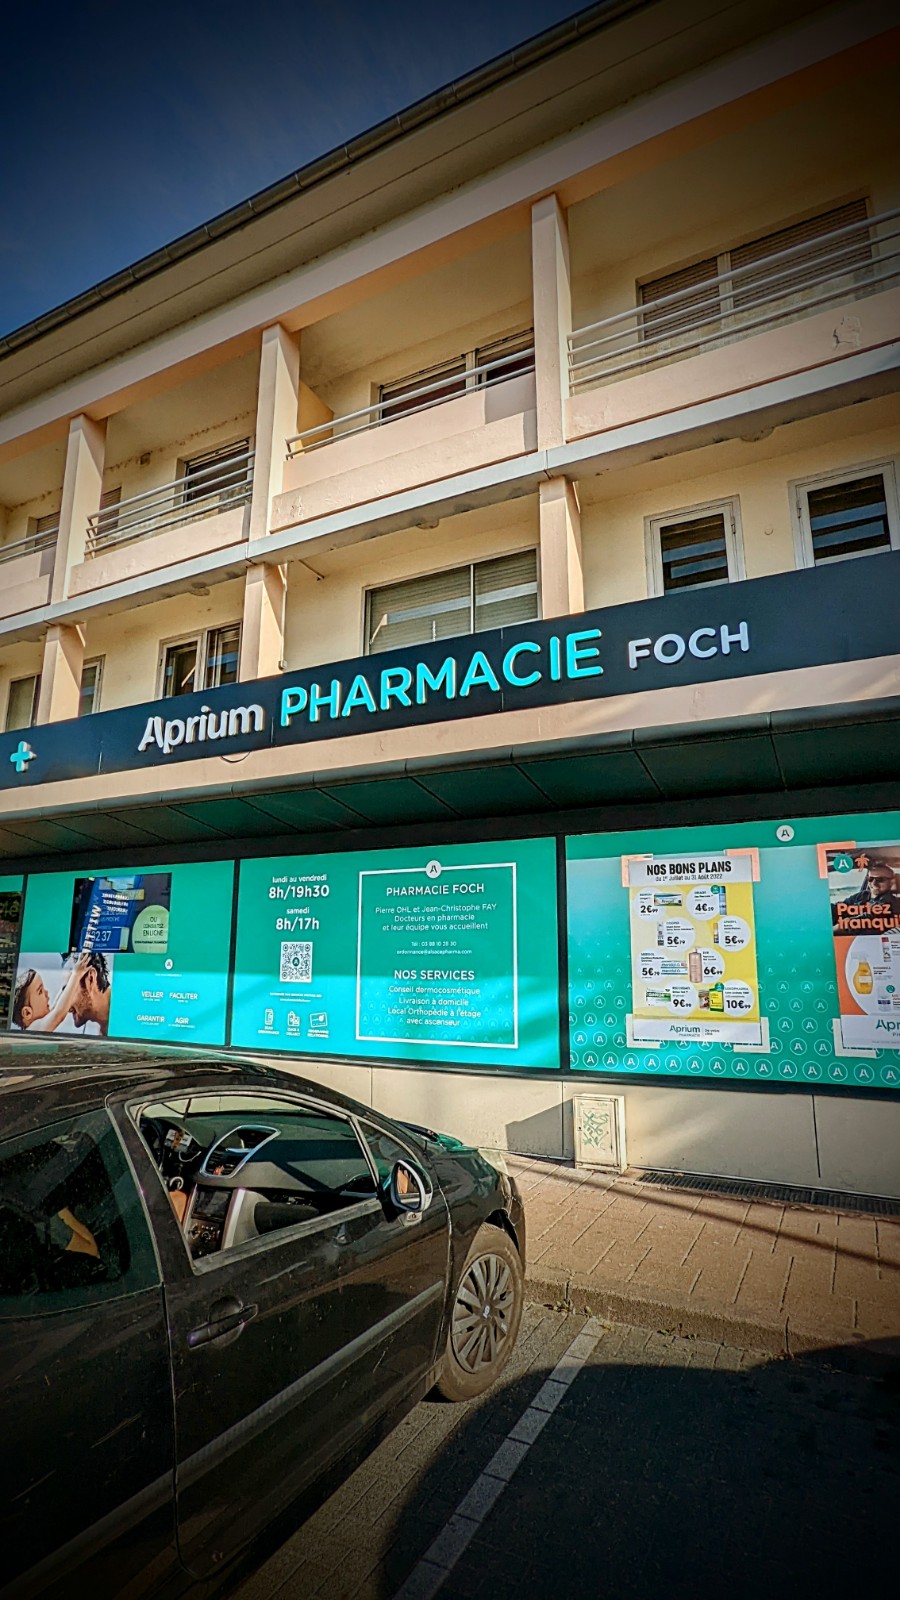 Aprium Pharmacie Foch